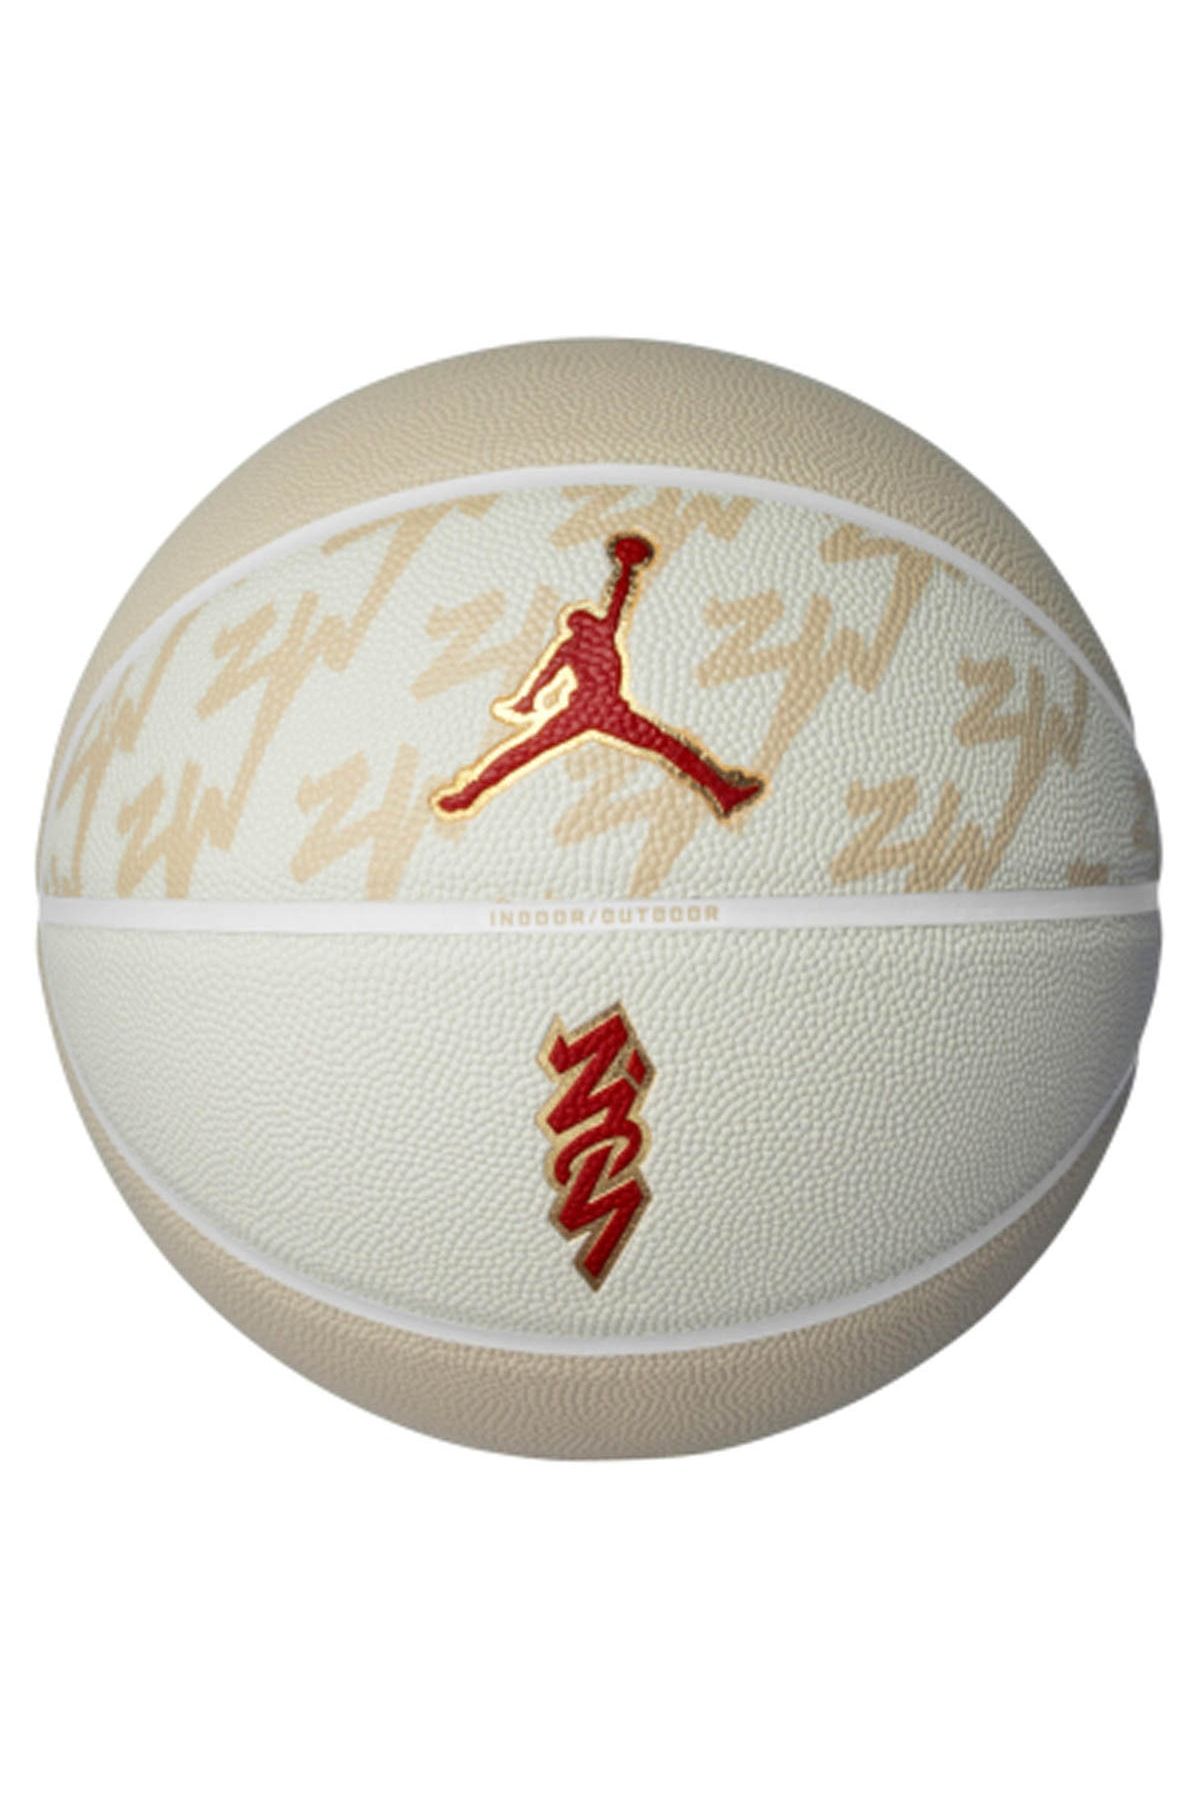 Nike Jordan All Court 8p Z Williamson Deflated Unisex Sarı Basketbol Topu J.100.4141.720.07